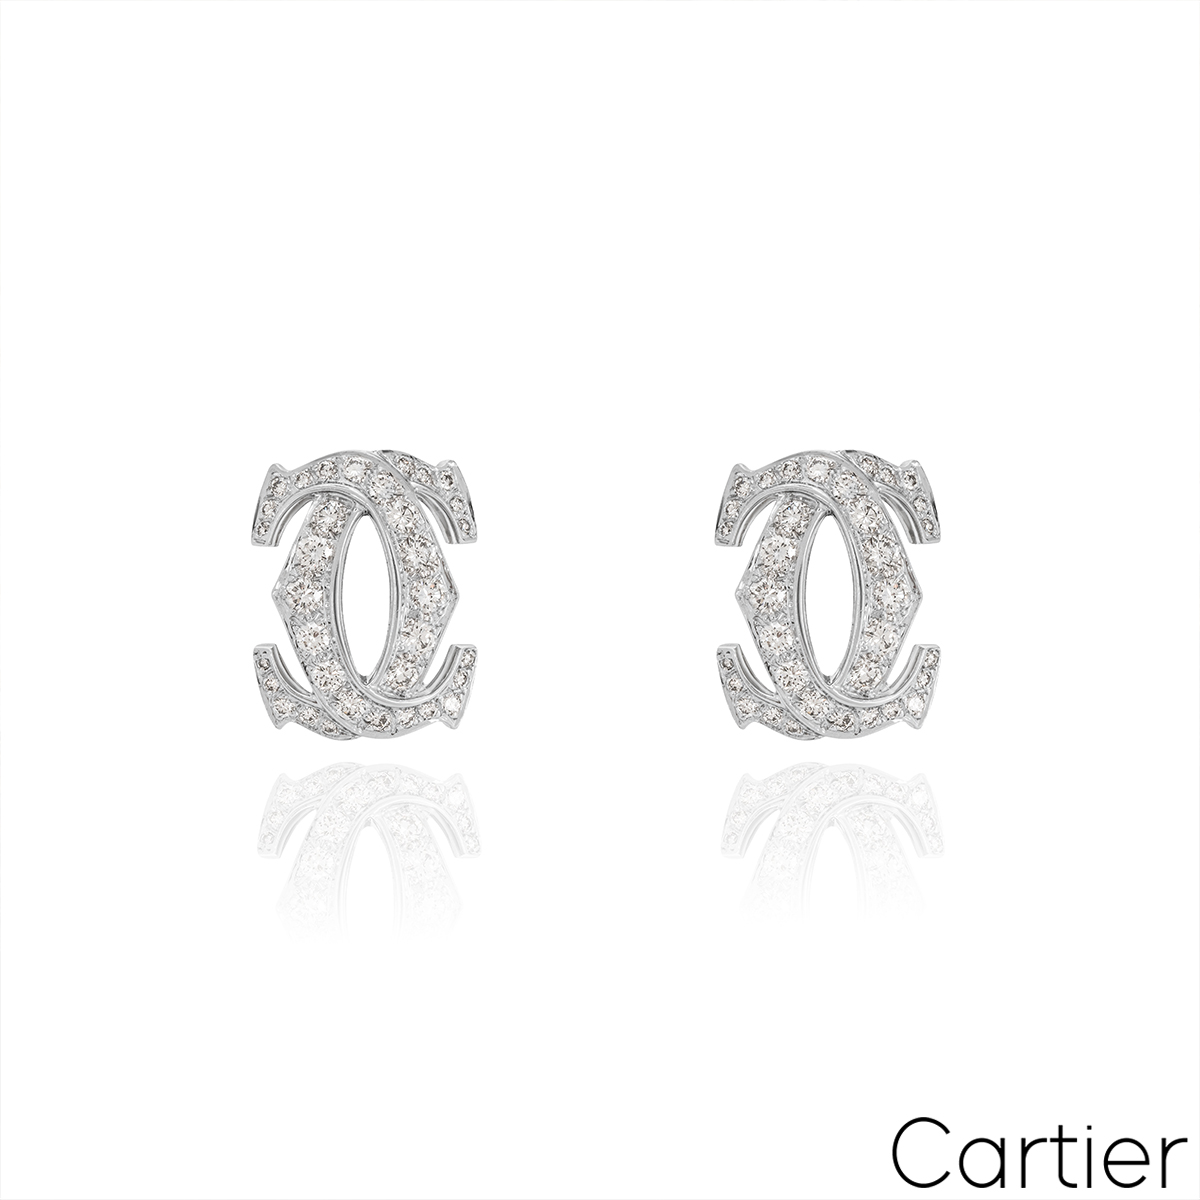 Cartier White Gold Diamond Penelope Large Double C Earrings